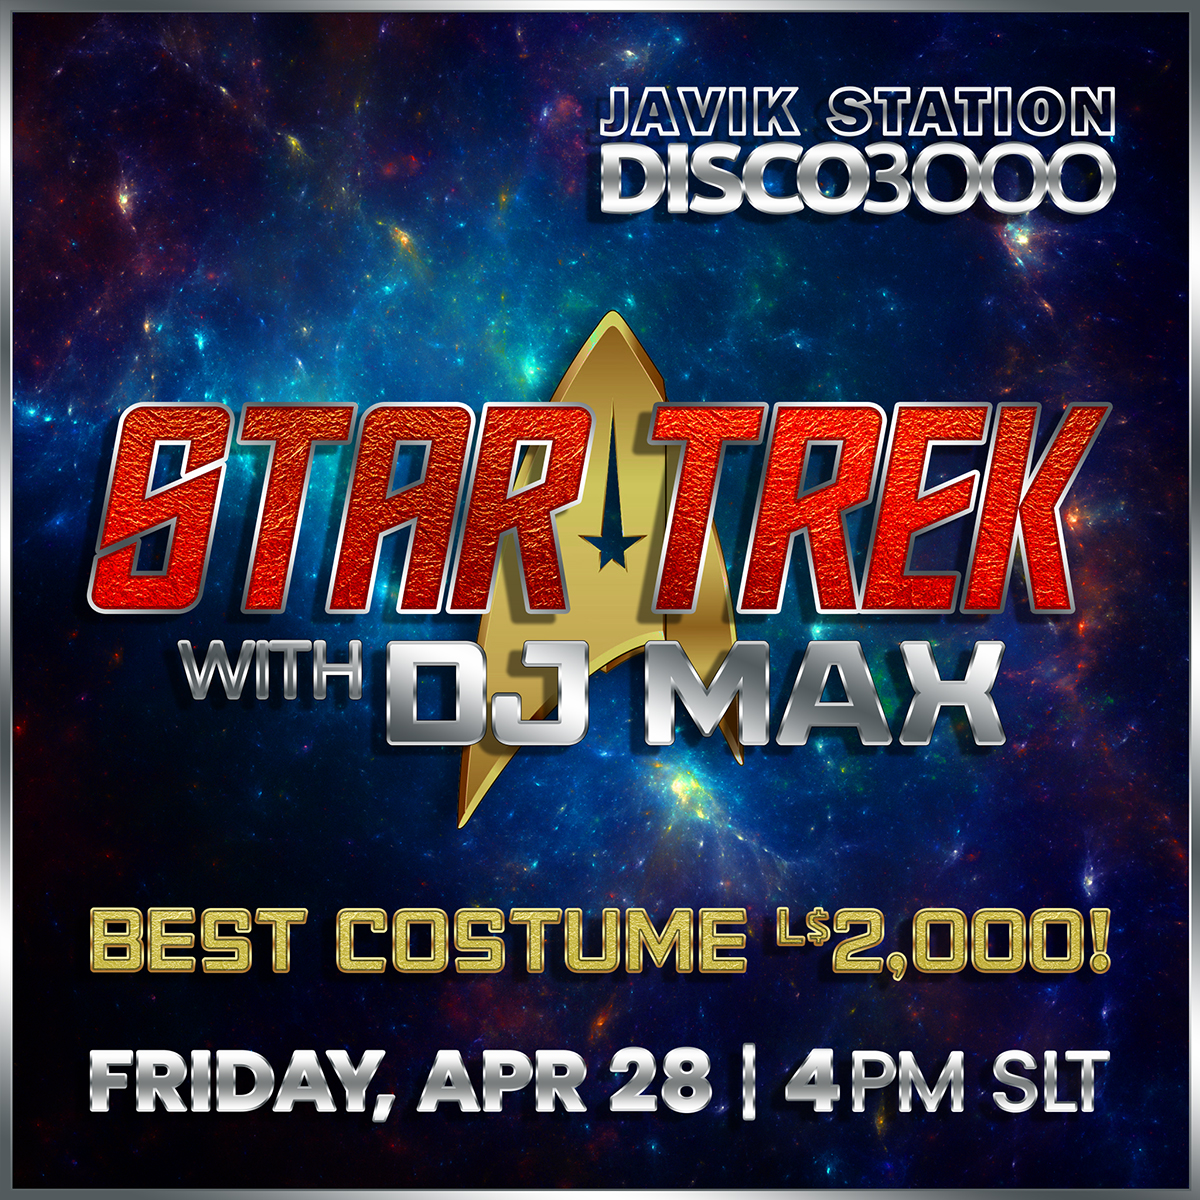 FRIDAY: DISCO 3000 STAR TREK PARTY with DJ MAX!